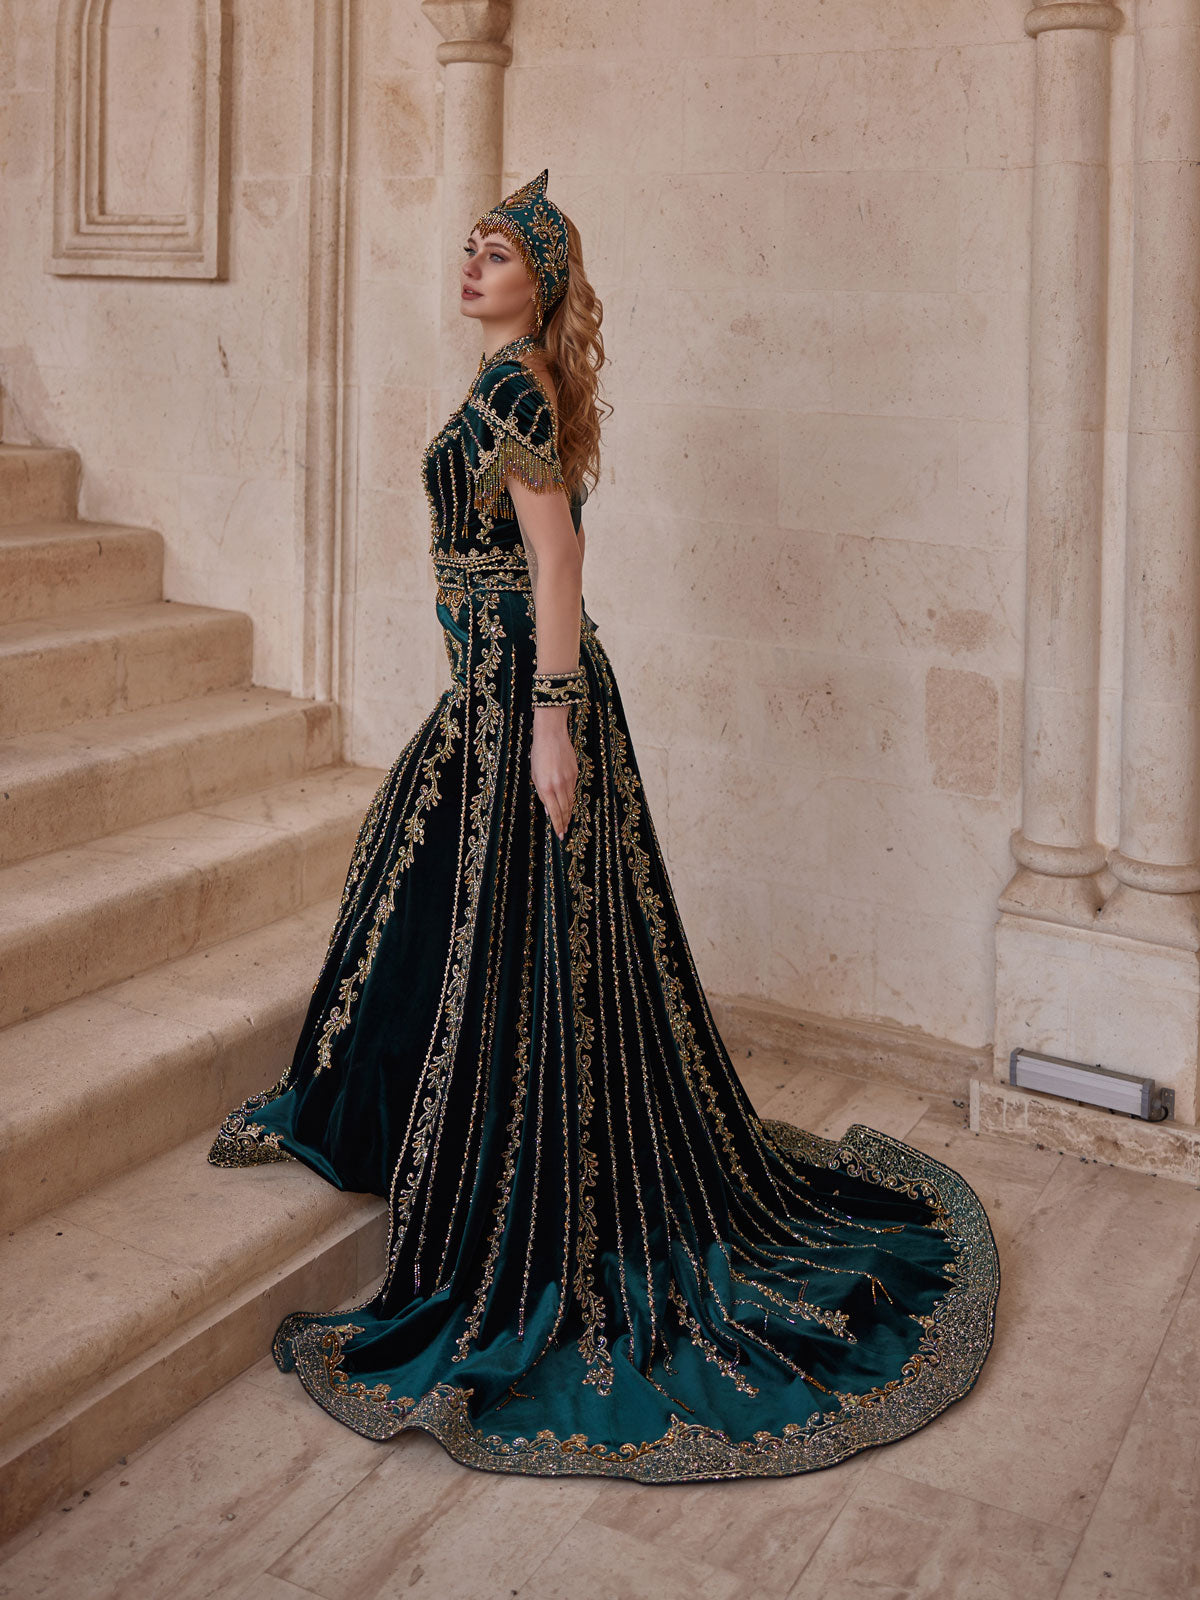 buy elegant Sophisticated Green Fitted Mermaid Gold Embellished Chapel Train Kaftan Dress plus sizes online dress boutiques